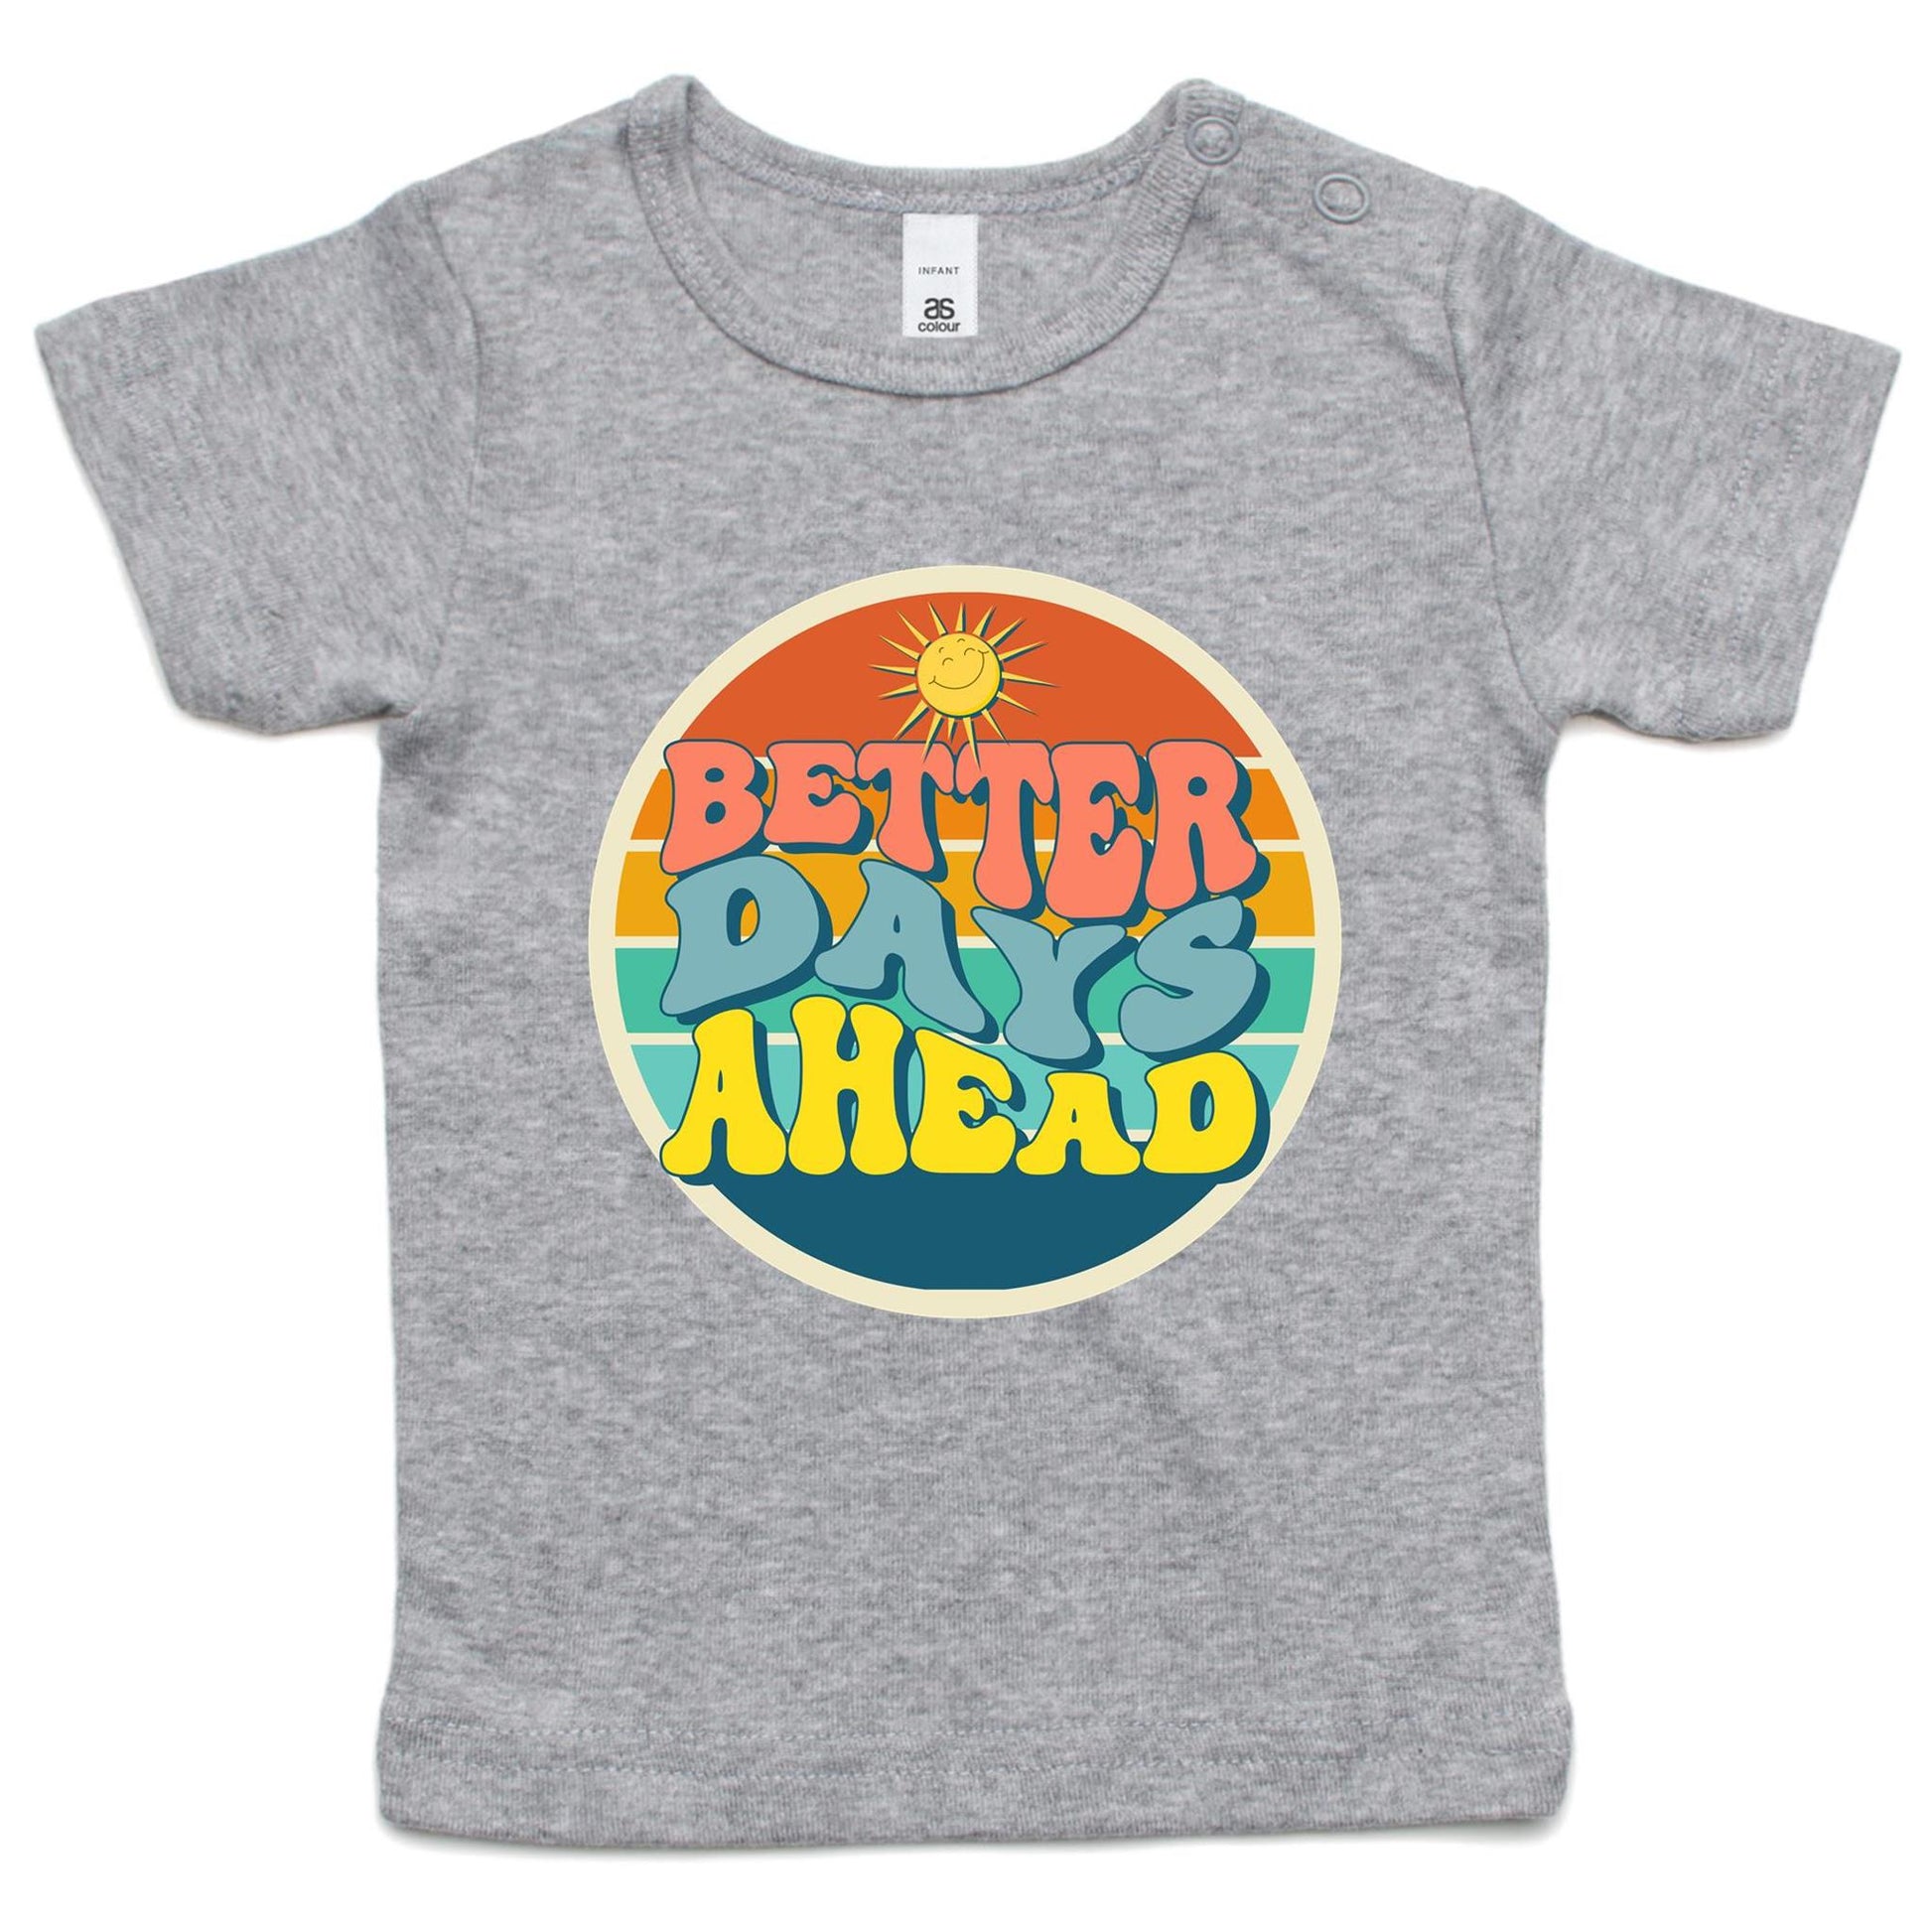 Better Days Ahead - Baby T-shirt Grey Marle Baby T-shirt Motivation Retro